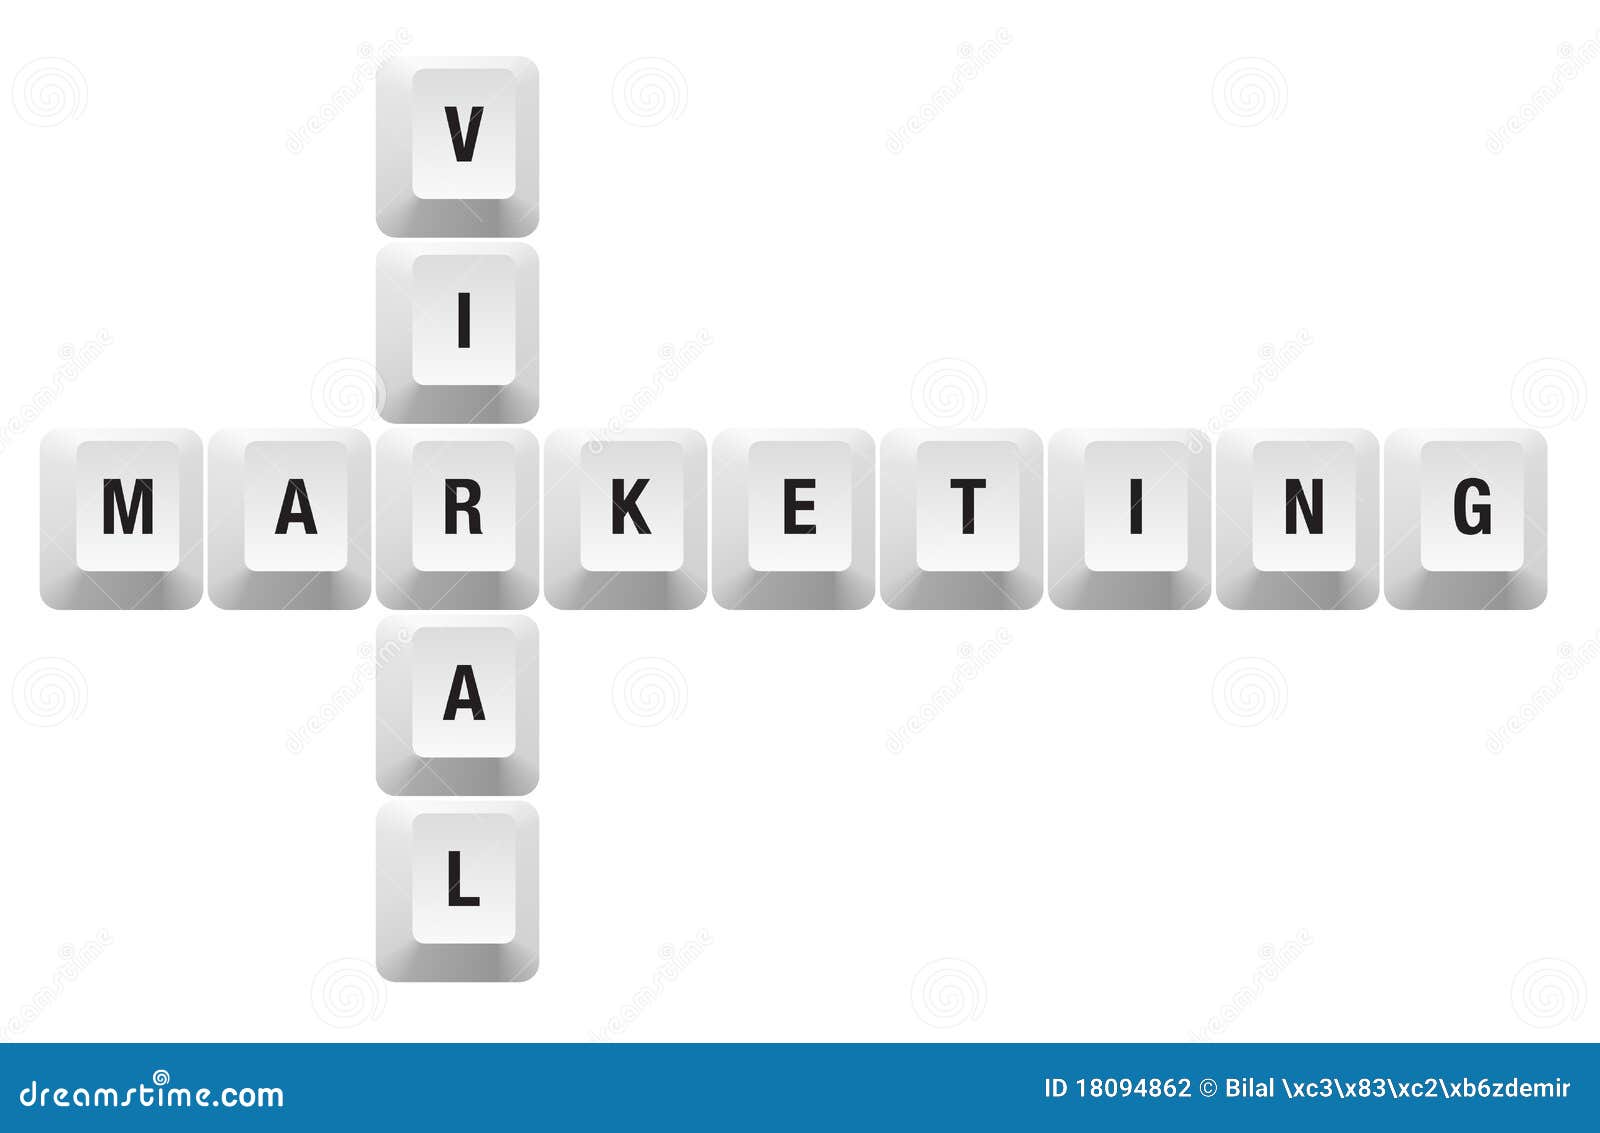 viral marketing key